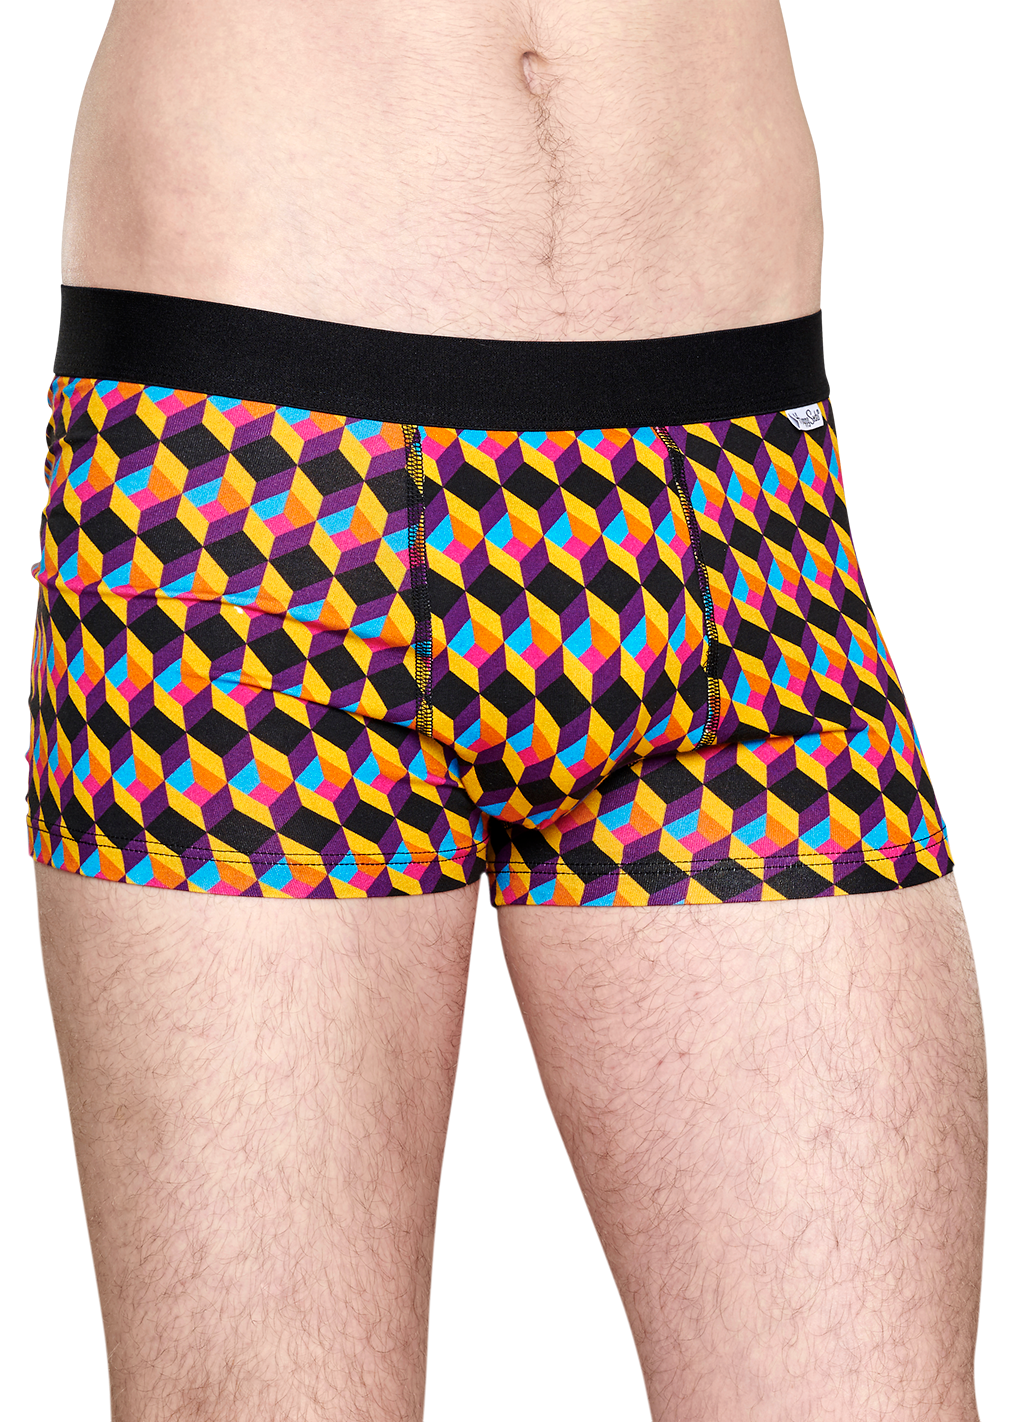 Men’s underwear: Optic Square Trunk, Yellow | Happy Socks